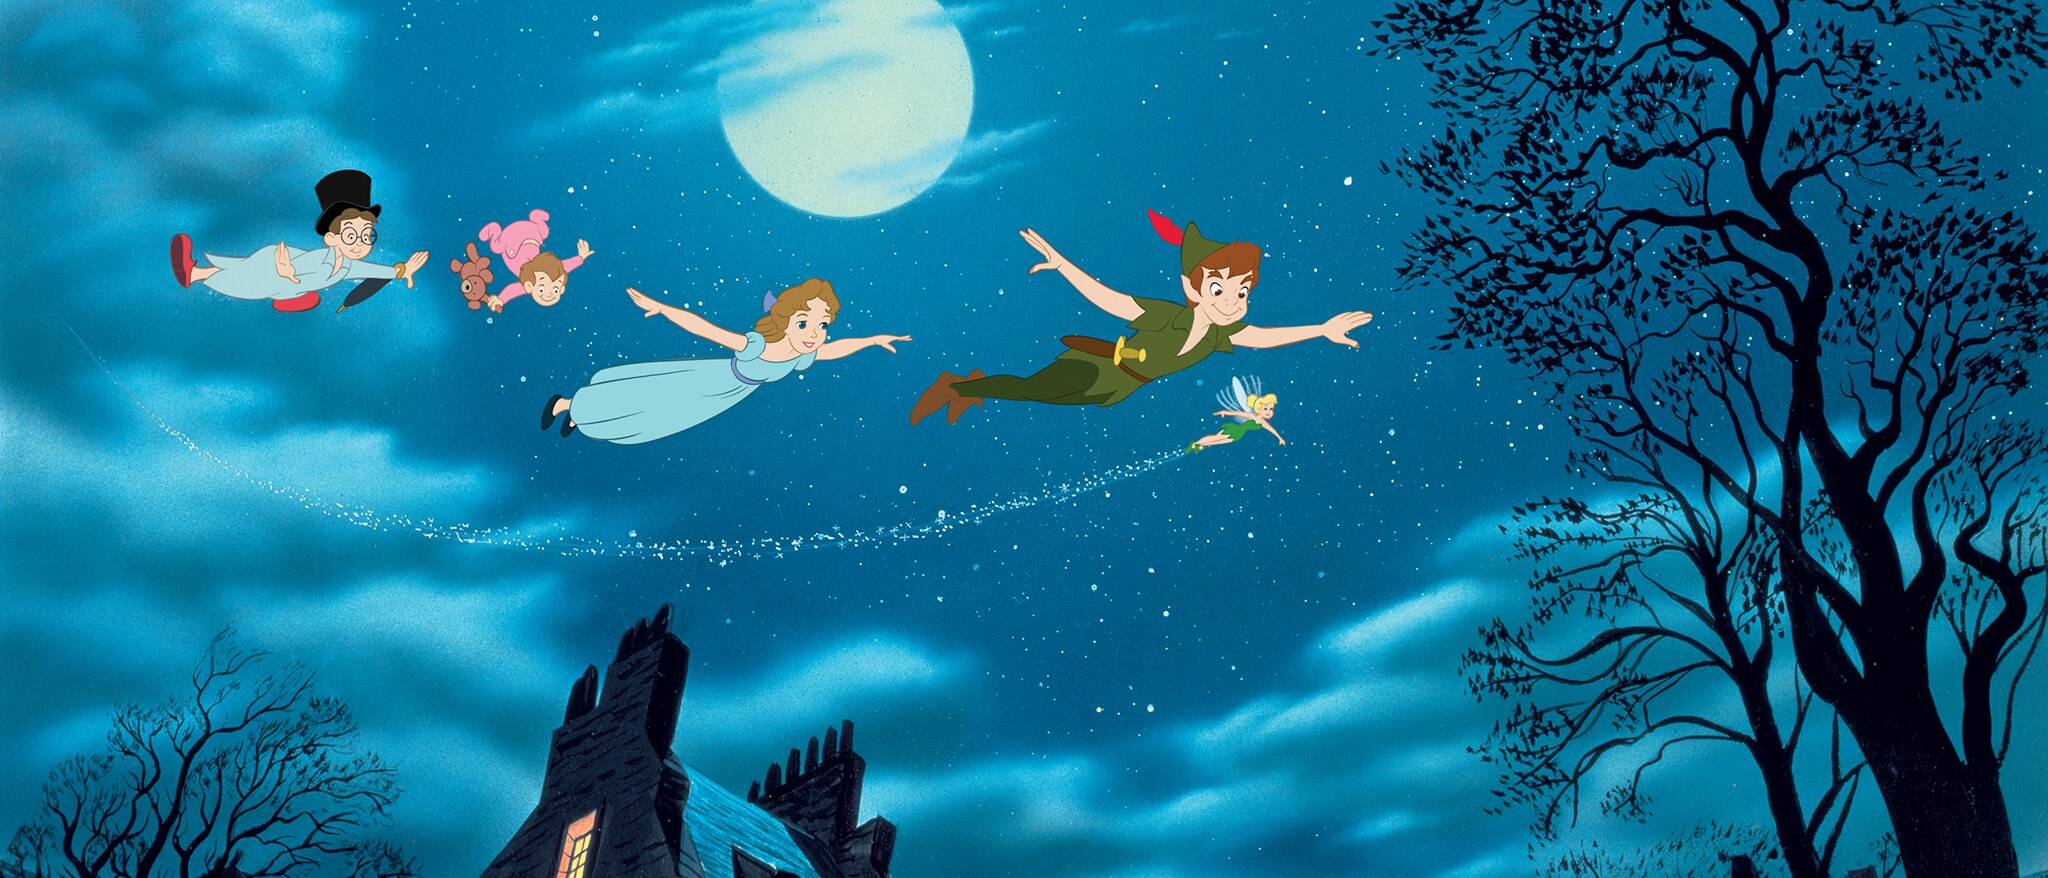 Peter Pan | Disney Movies